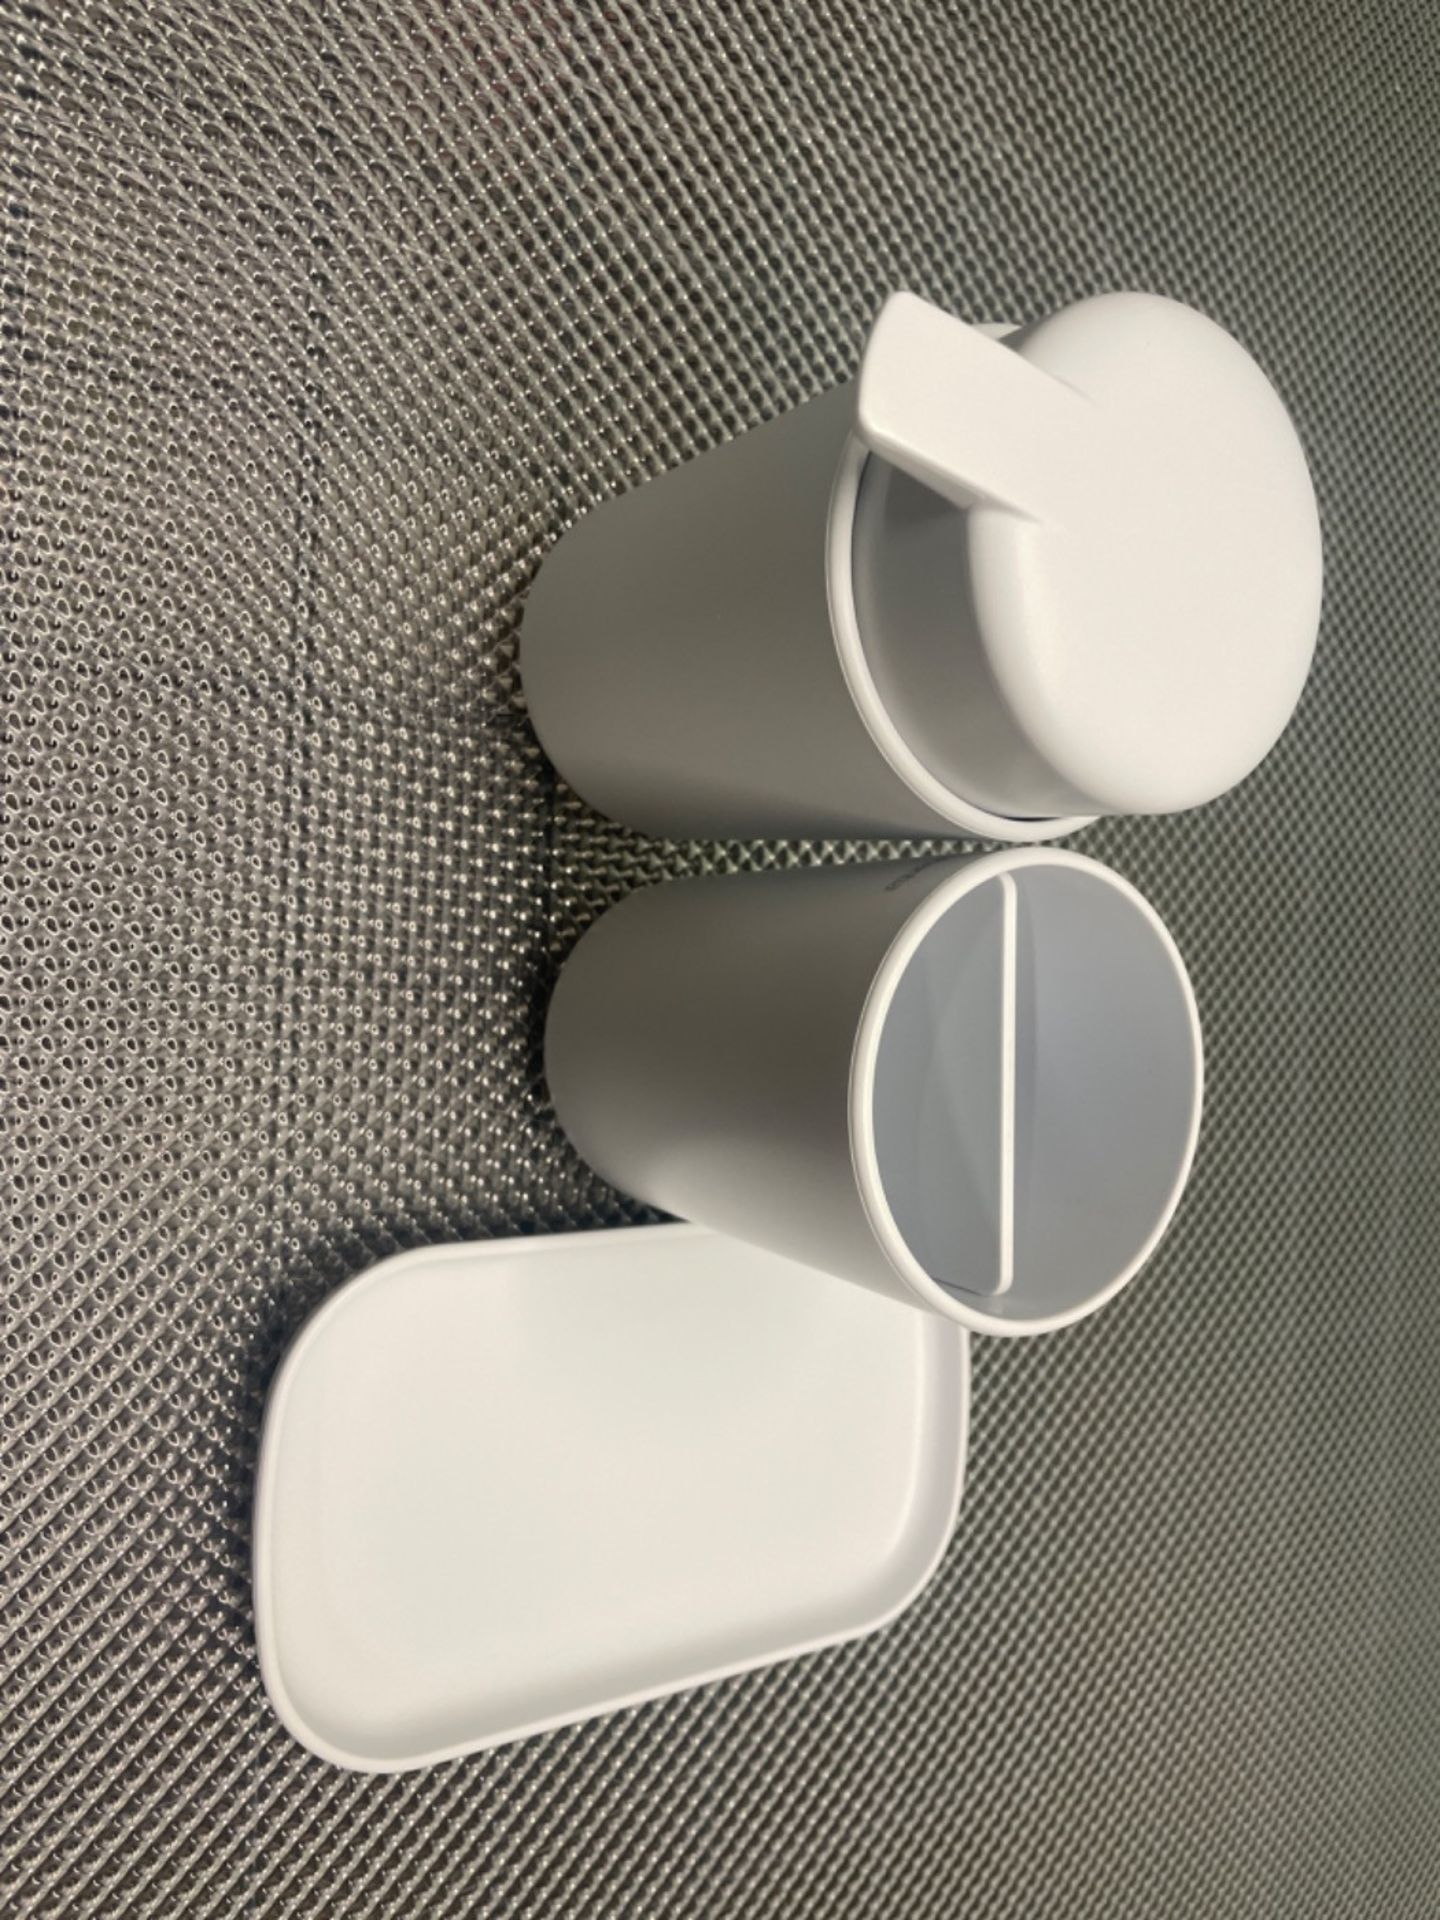 Brabantia Renew 3 Piece Bathroom Accessory Set, Set of 3, Refillable Handwash Soap Dispenser, Too... - Image 2 of 2